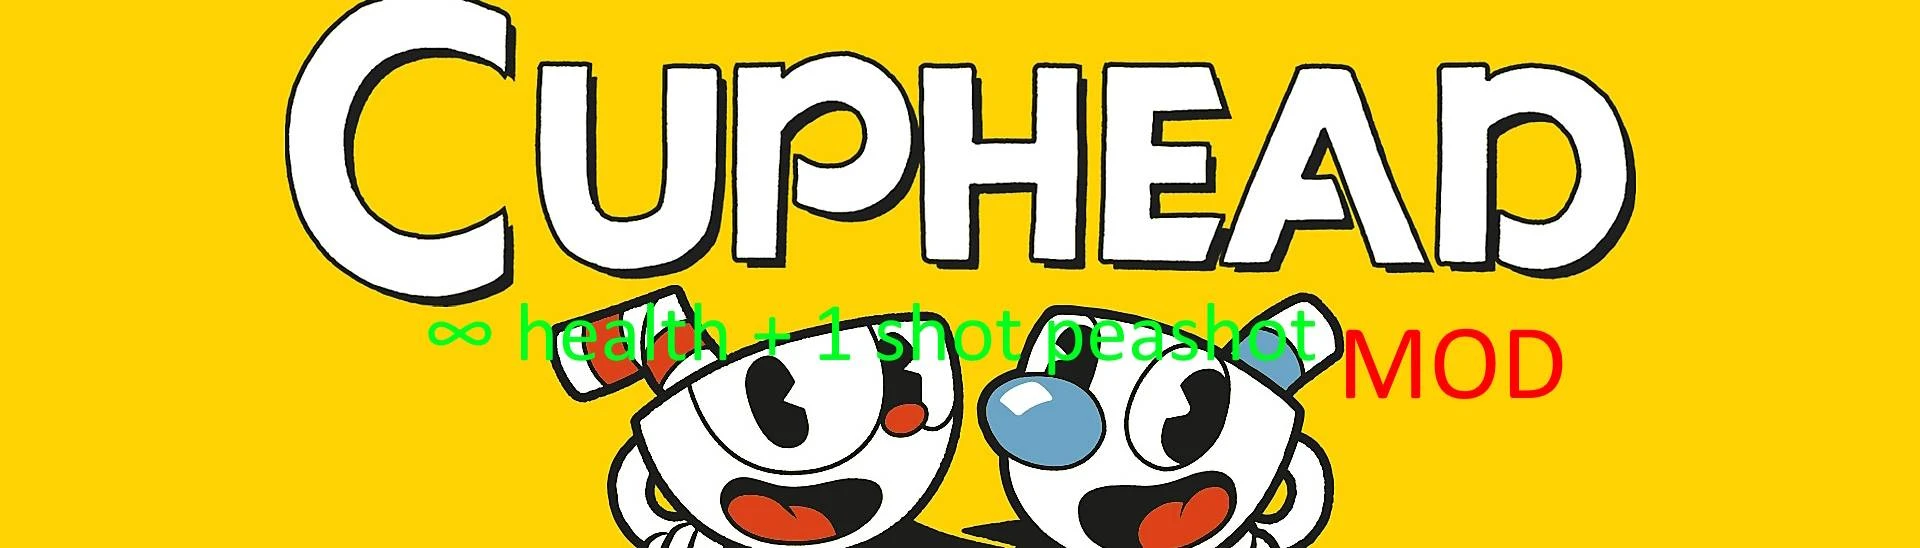 Cuphead Nexus - Mods and community